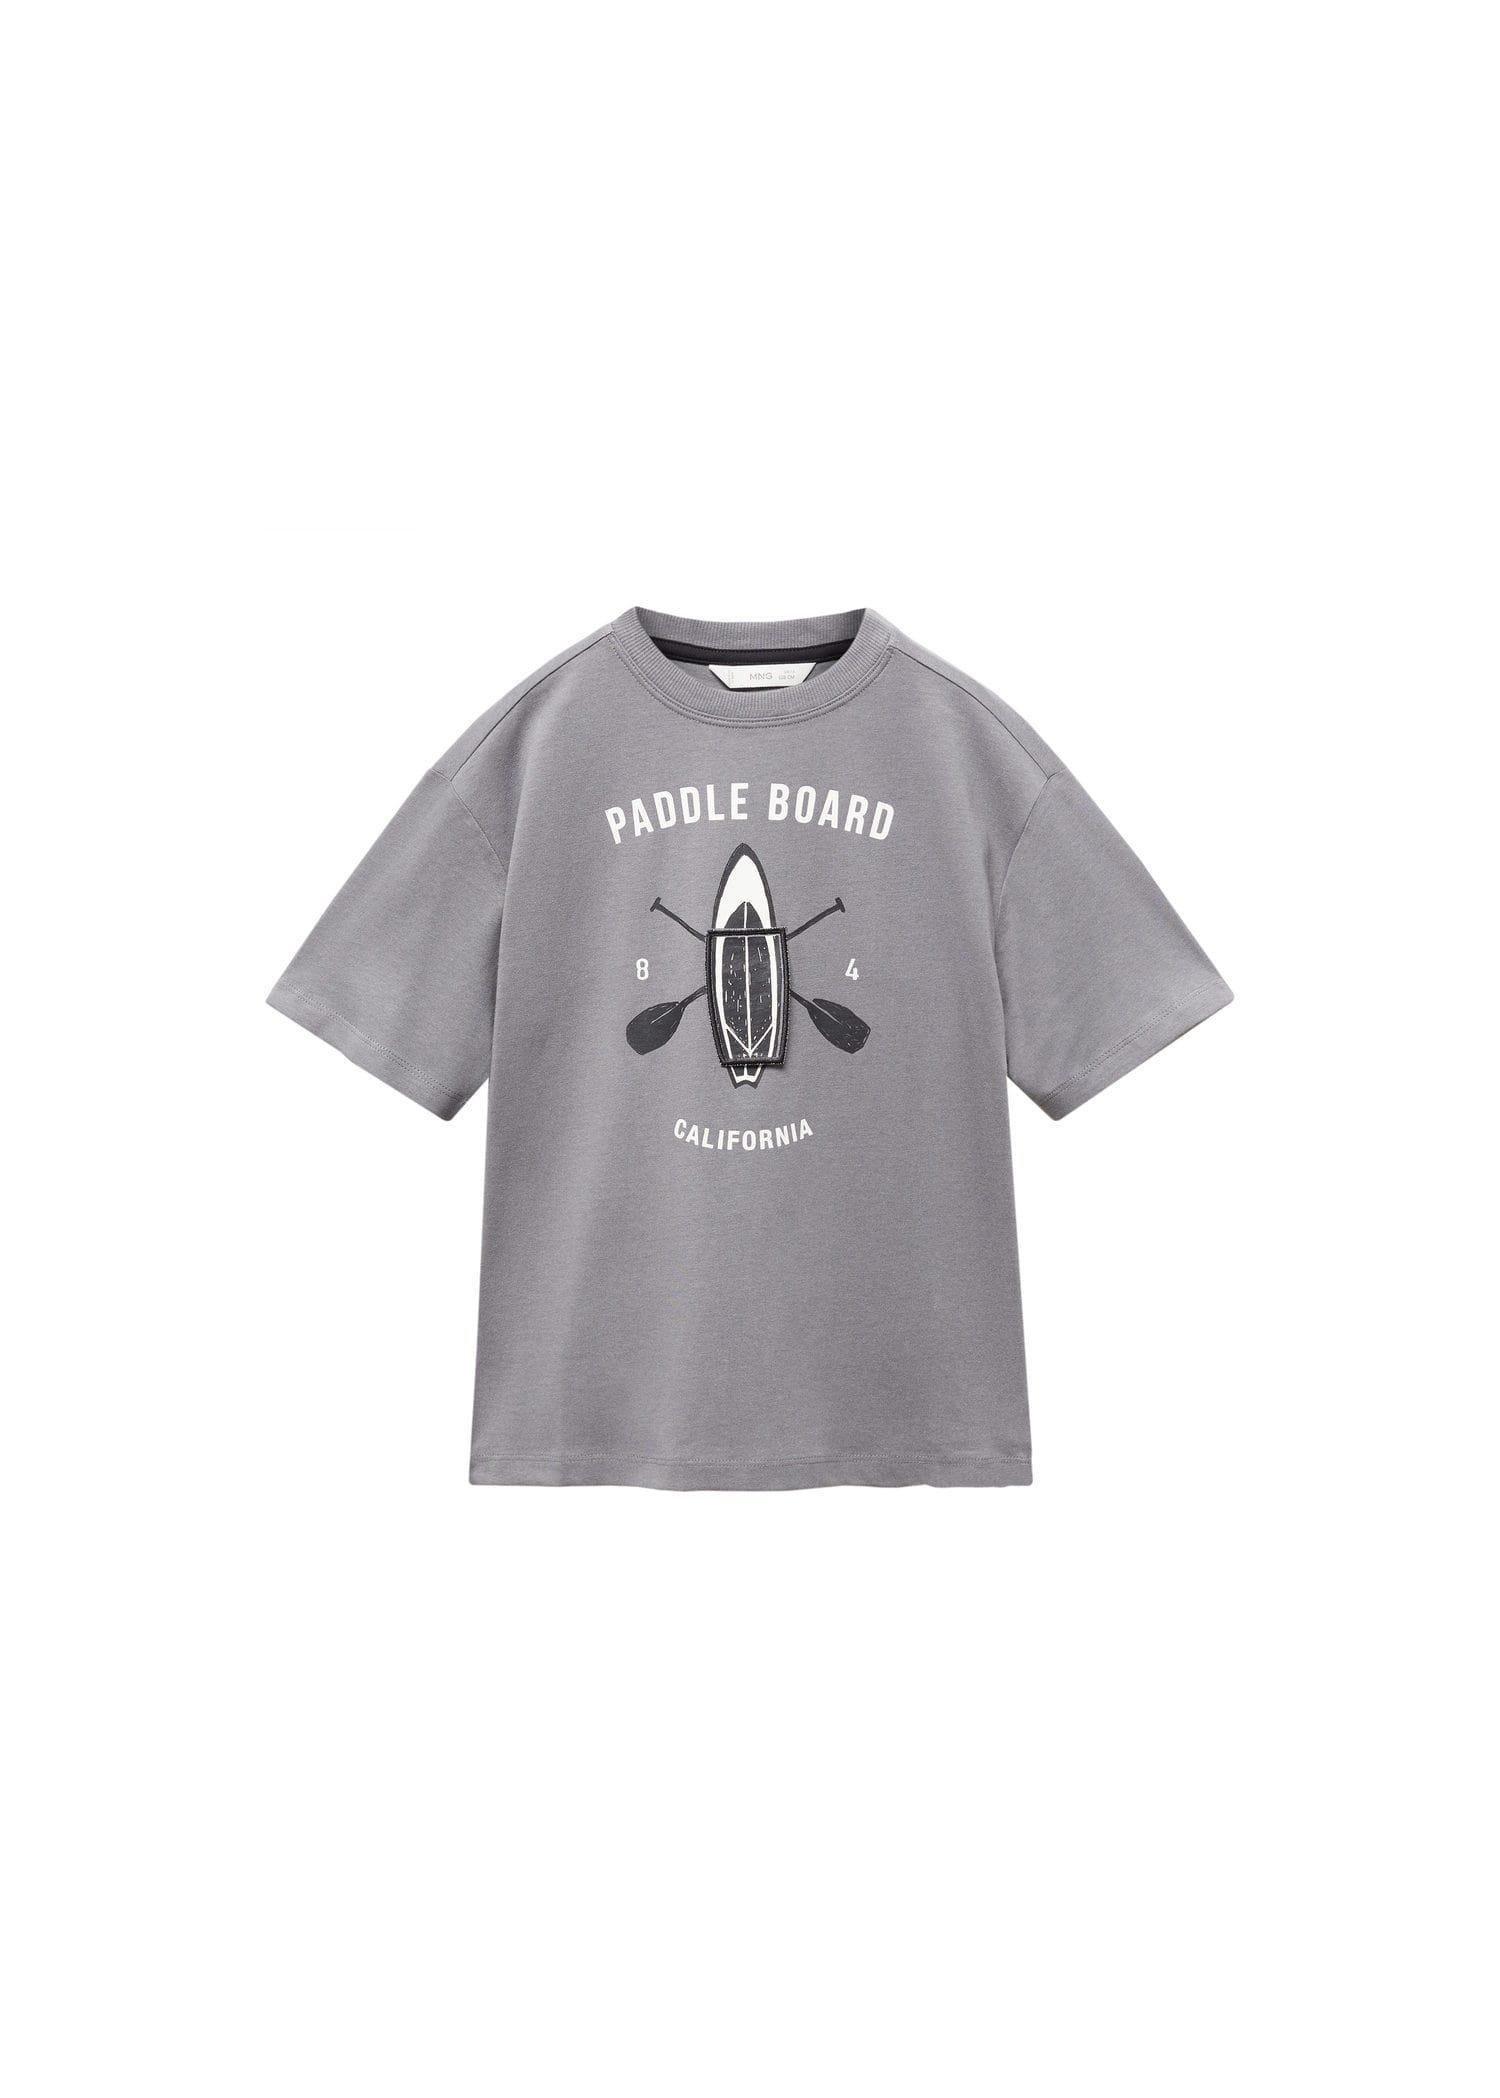 Mango - Grey Surf Printed T-Shirt, Kids Boys